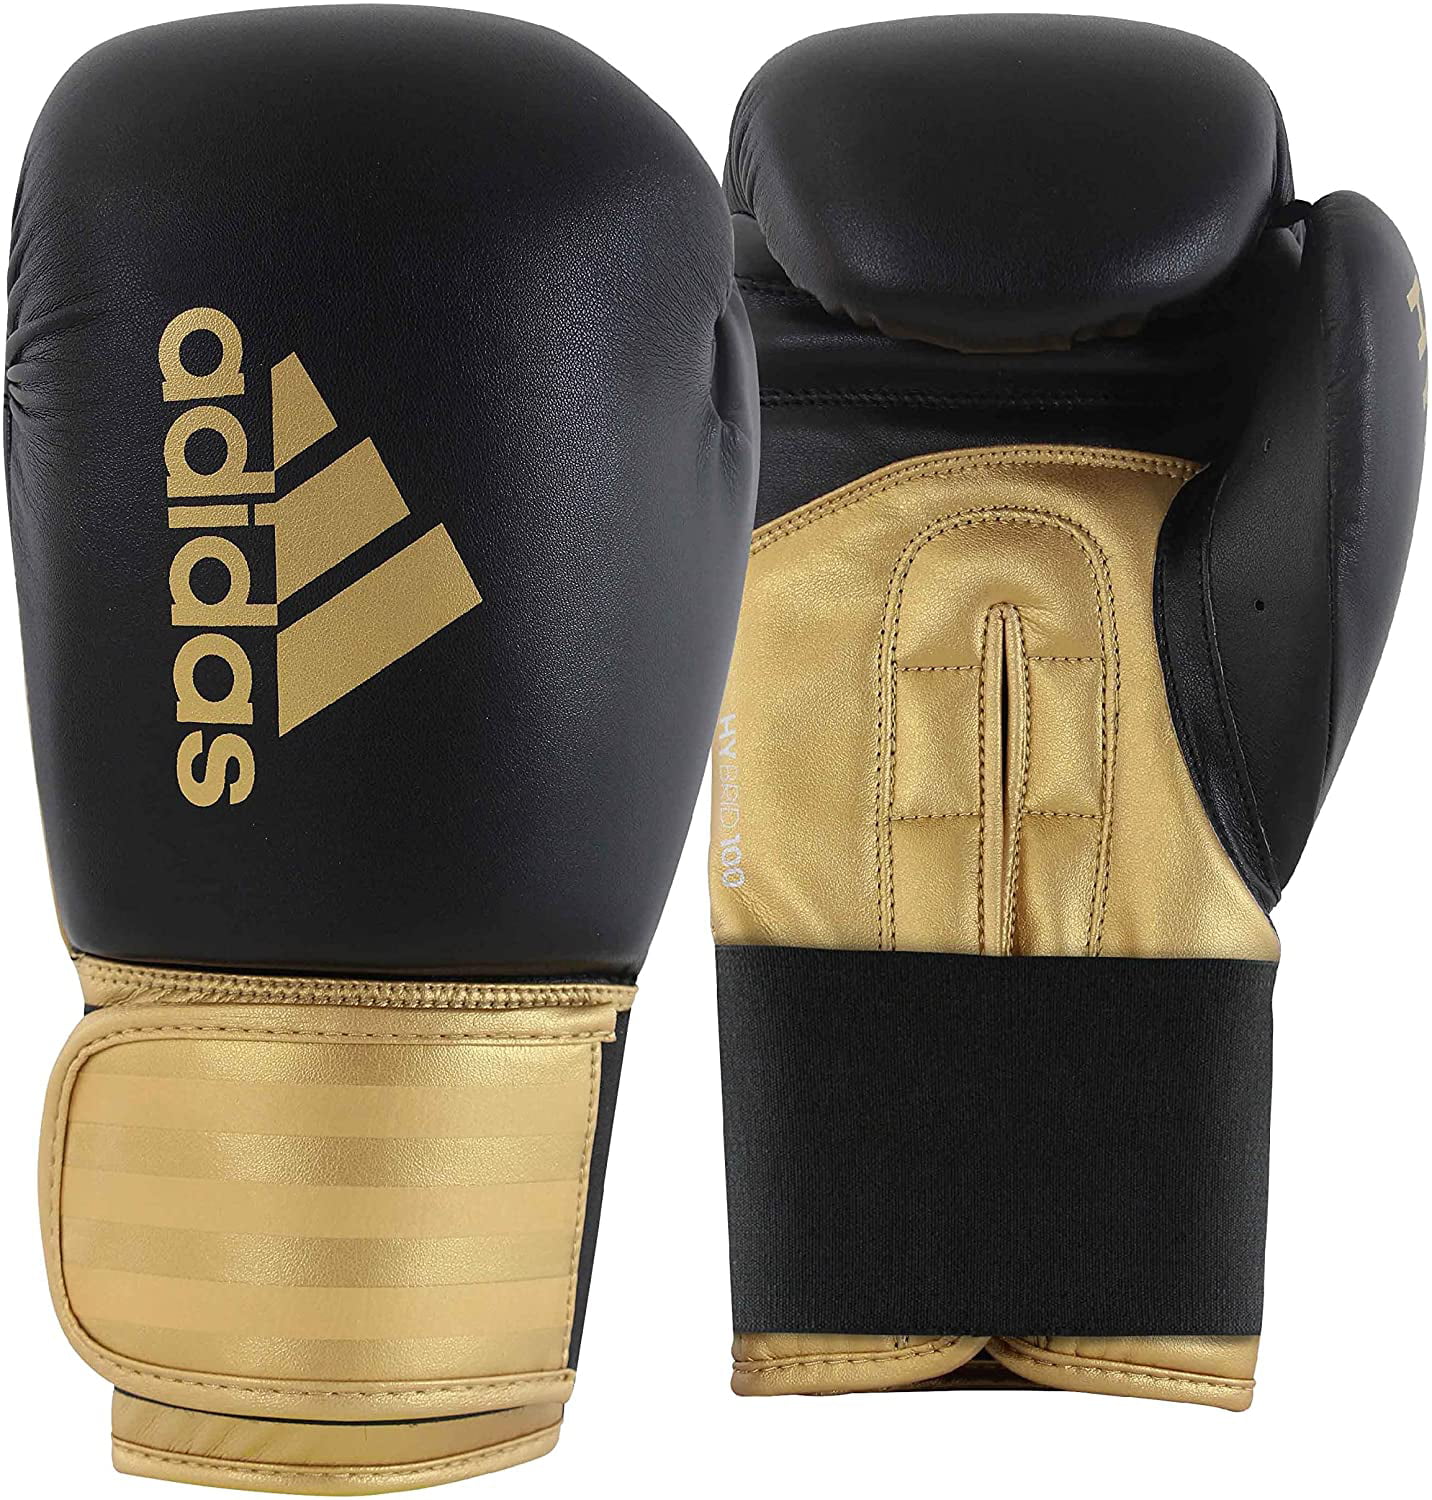 REEBOK BOXING GLOVES Black Gold Combat Punch Martial Boxing Gloves 12oz 16oz 